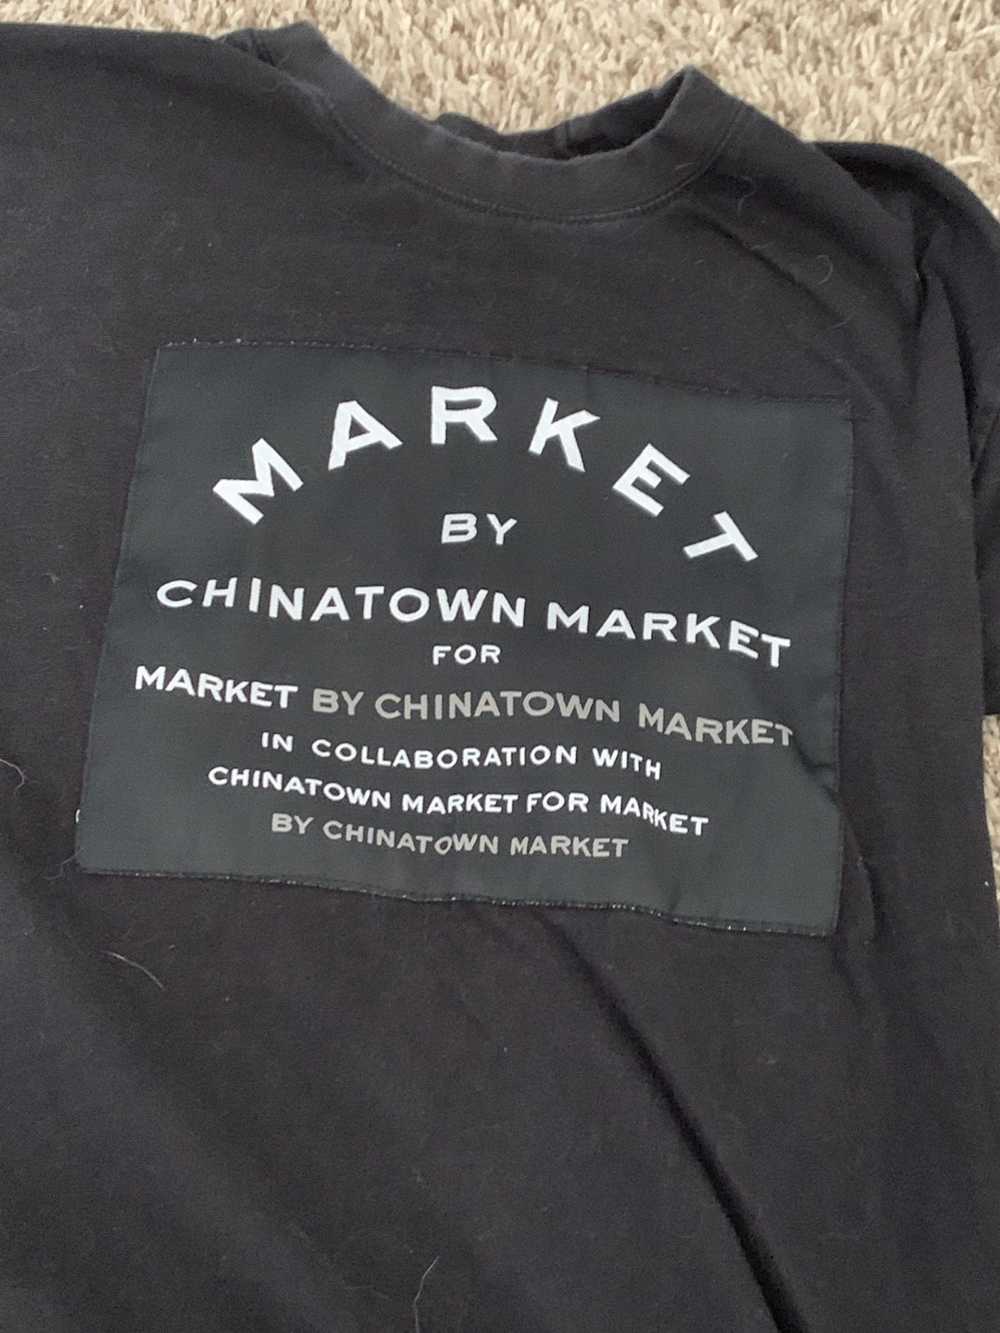 Market CHINATOWN MARKET - image 1